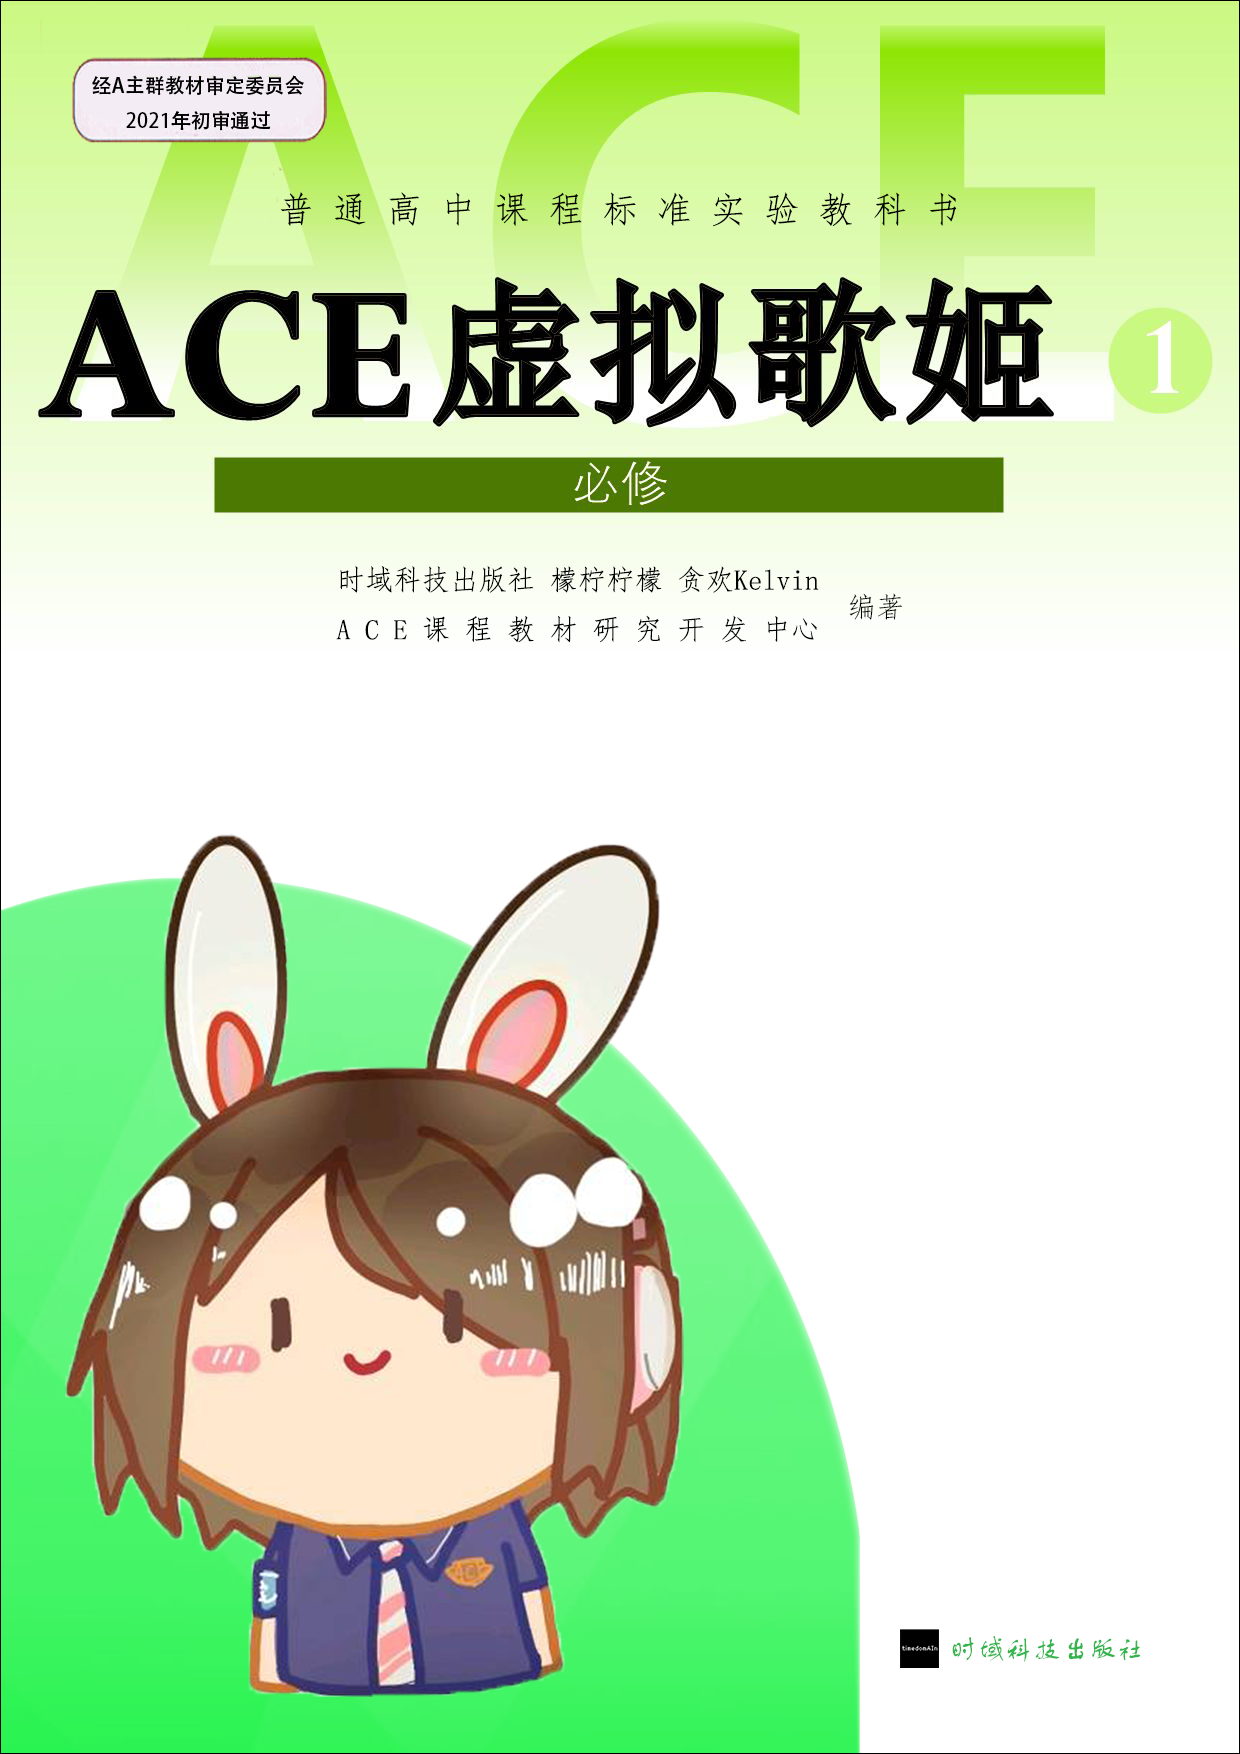 ACE界面/功能介绍 v2.5.4|ACE虚拟歌姬 - 第3张